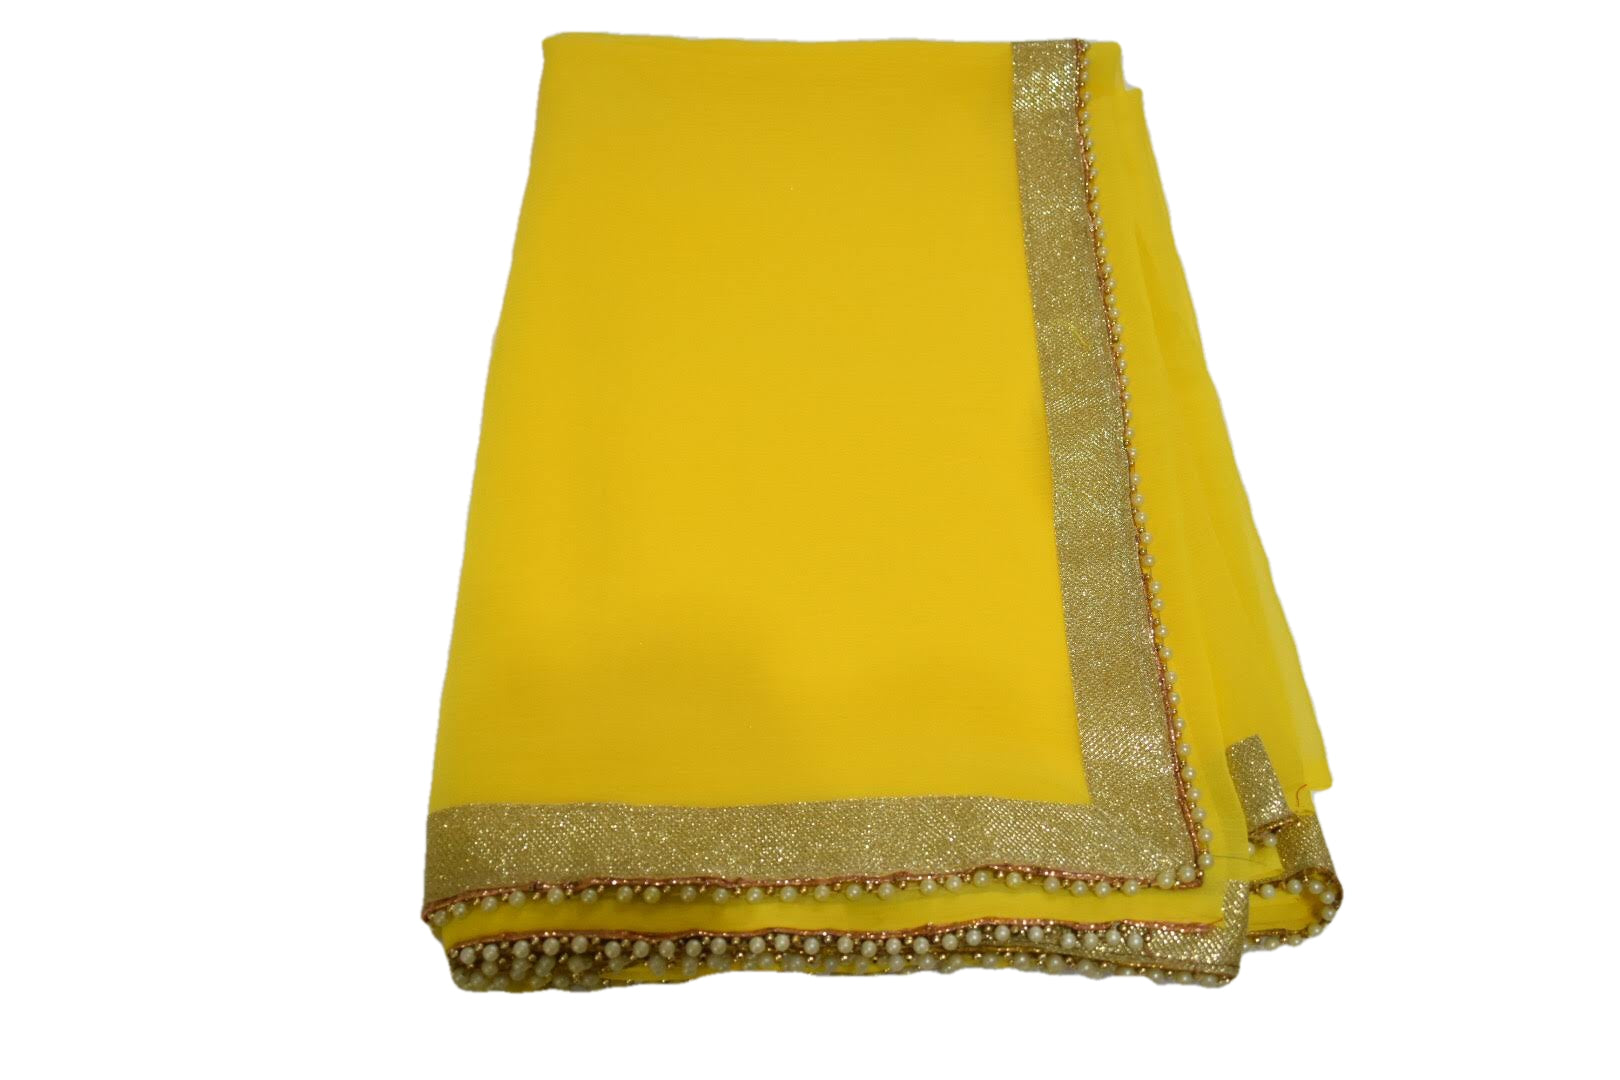 Yellow Color - Marble Textured Chiffon Saree - Golden Lace Border - Pearl Beads border - Haldi Ceremony Saree